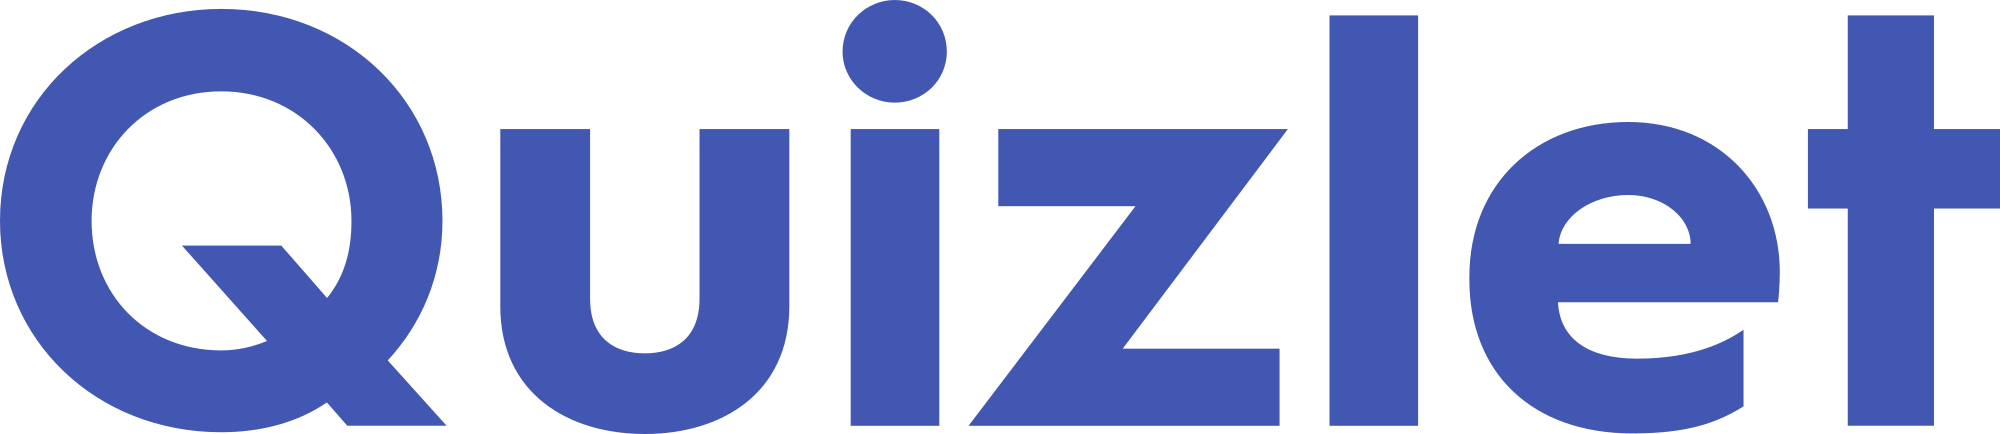 Quizlet Logo - File:Quizlet Logo.svg - Wikimedia Commons